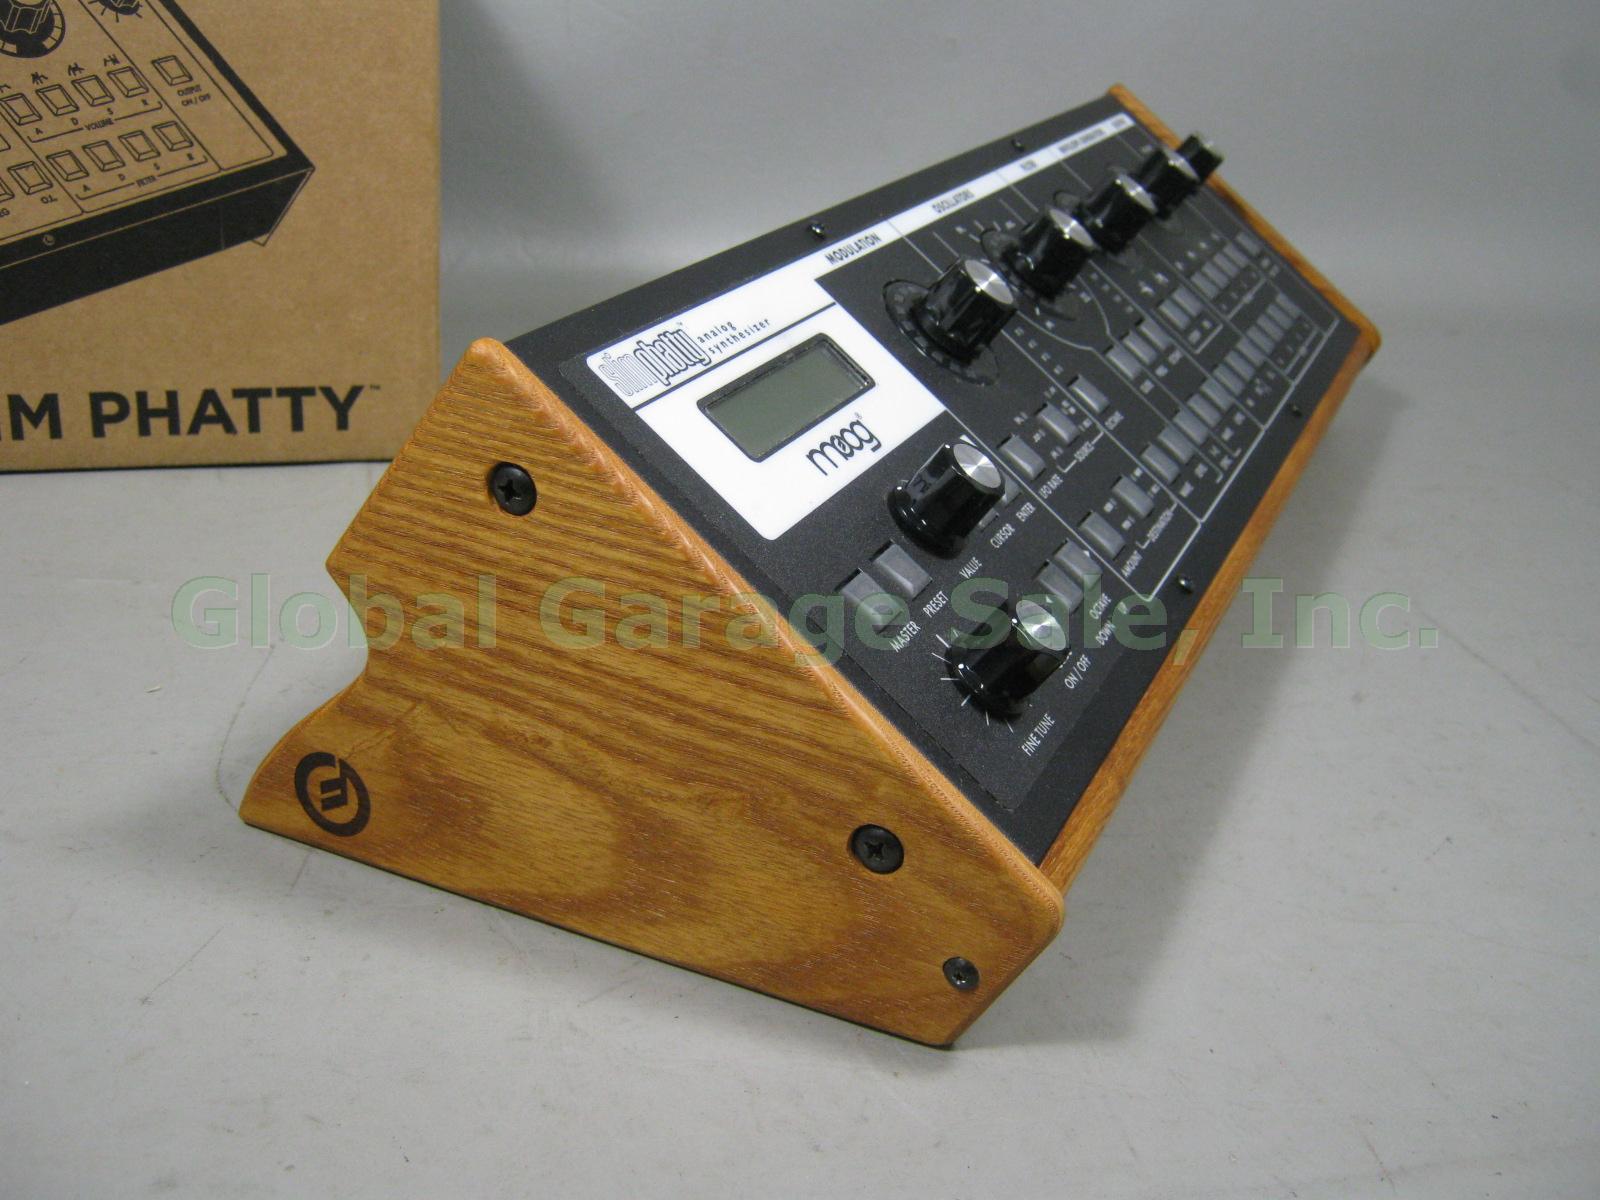 MIB Moog Slim Phatty Analog Synthesizer Wood Sides Original Box Barely Used NR! 4